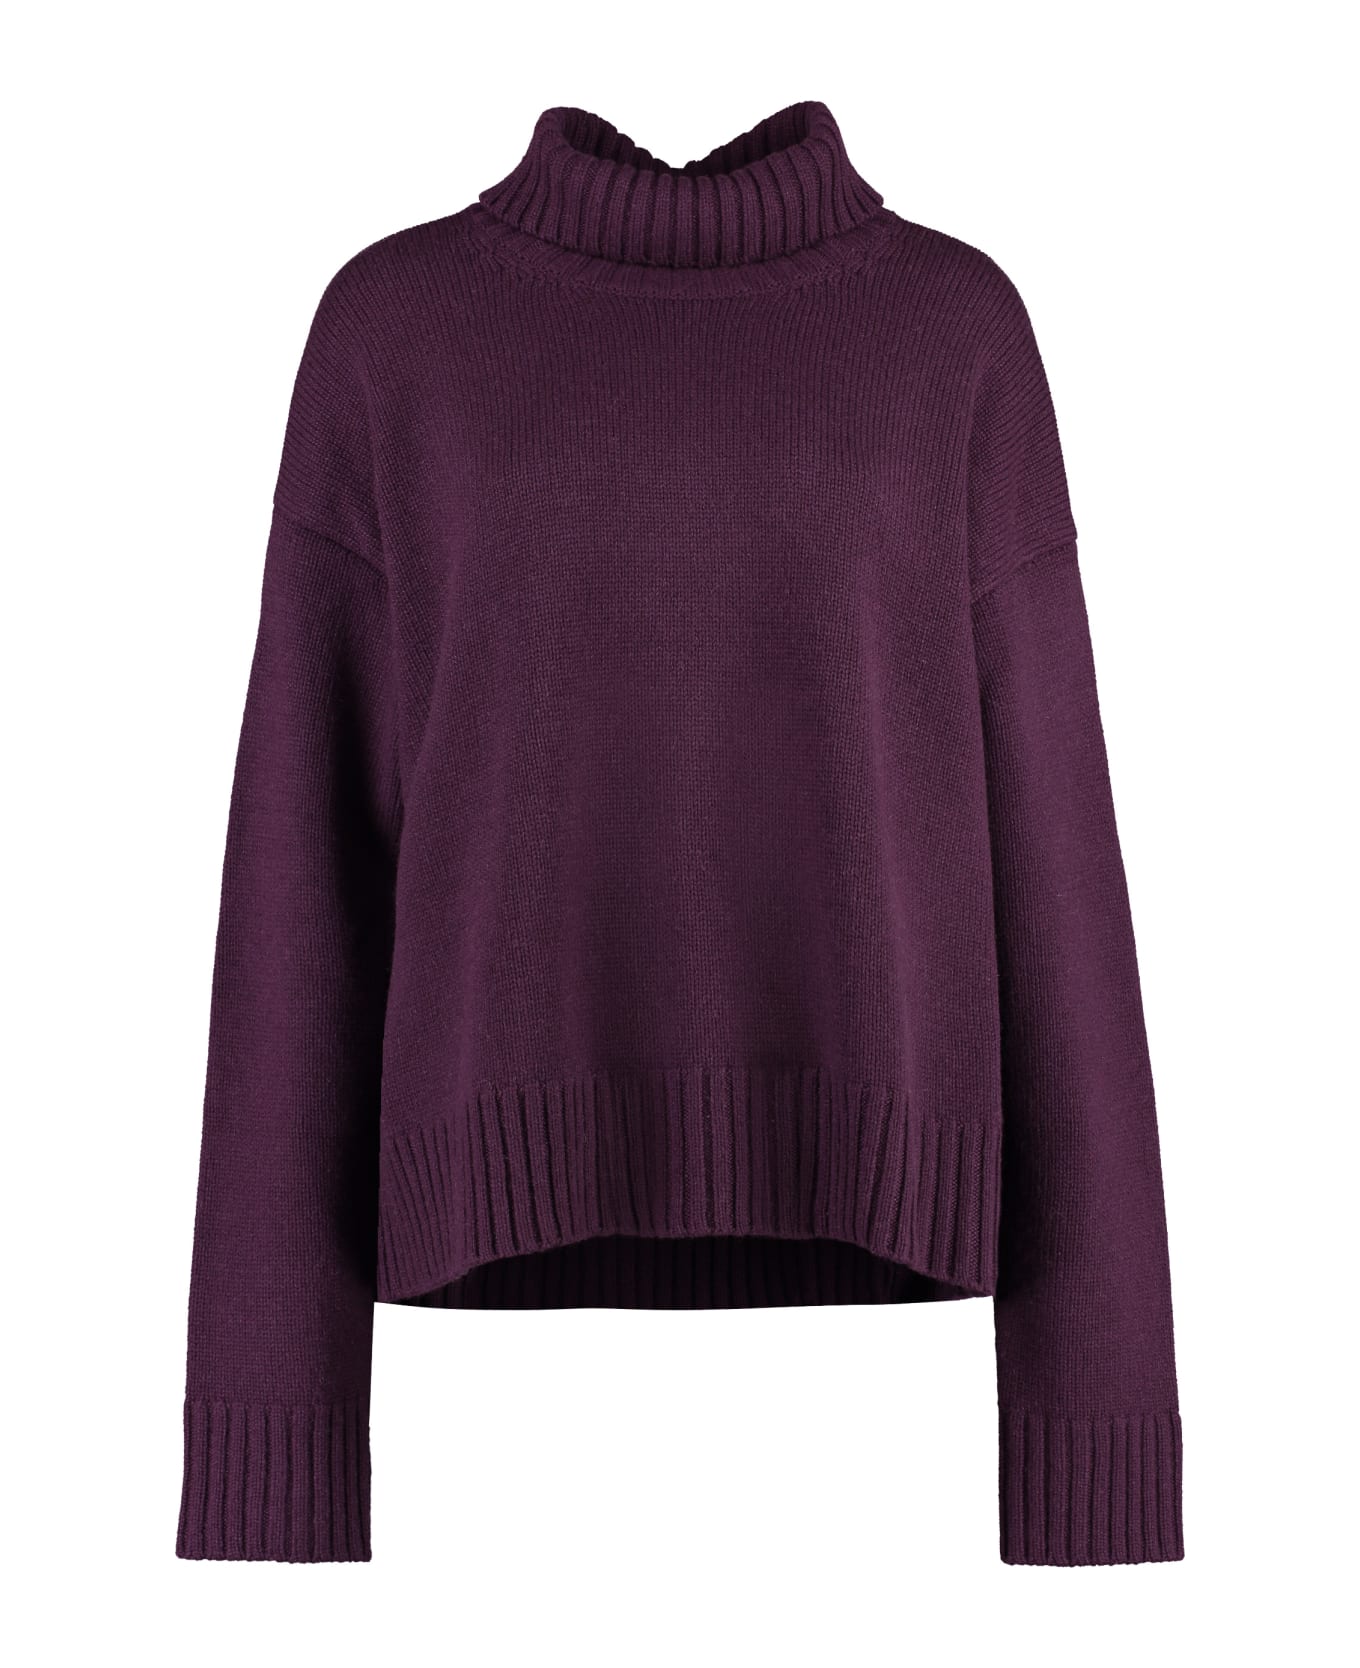 Jil Sander Cashmere Sweater - purple